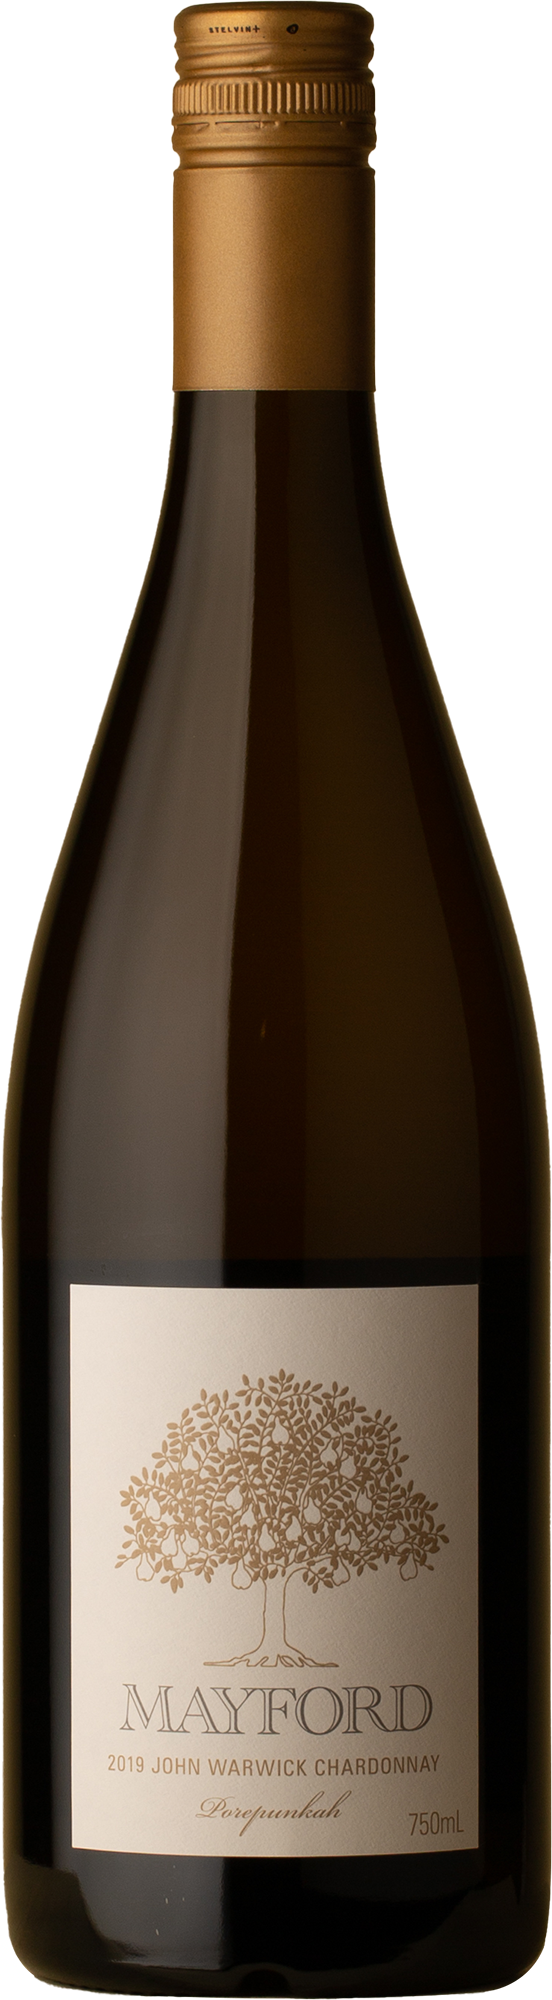 Mayford - John Warwick Chardonnay 2019 White Wine